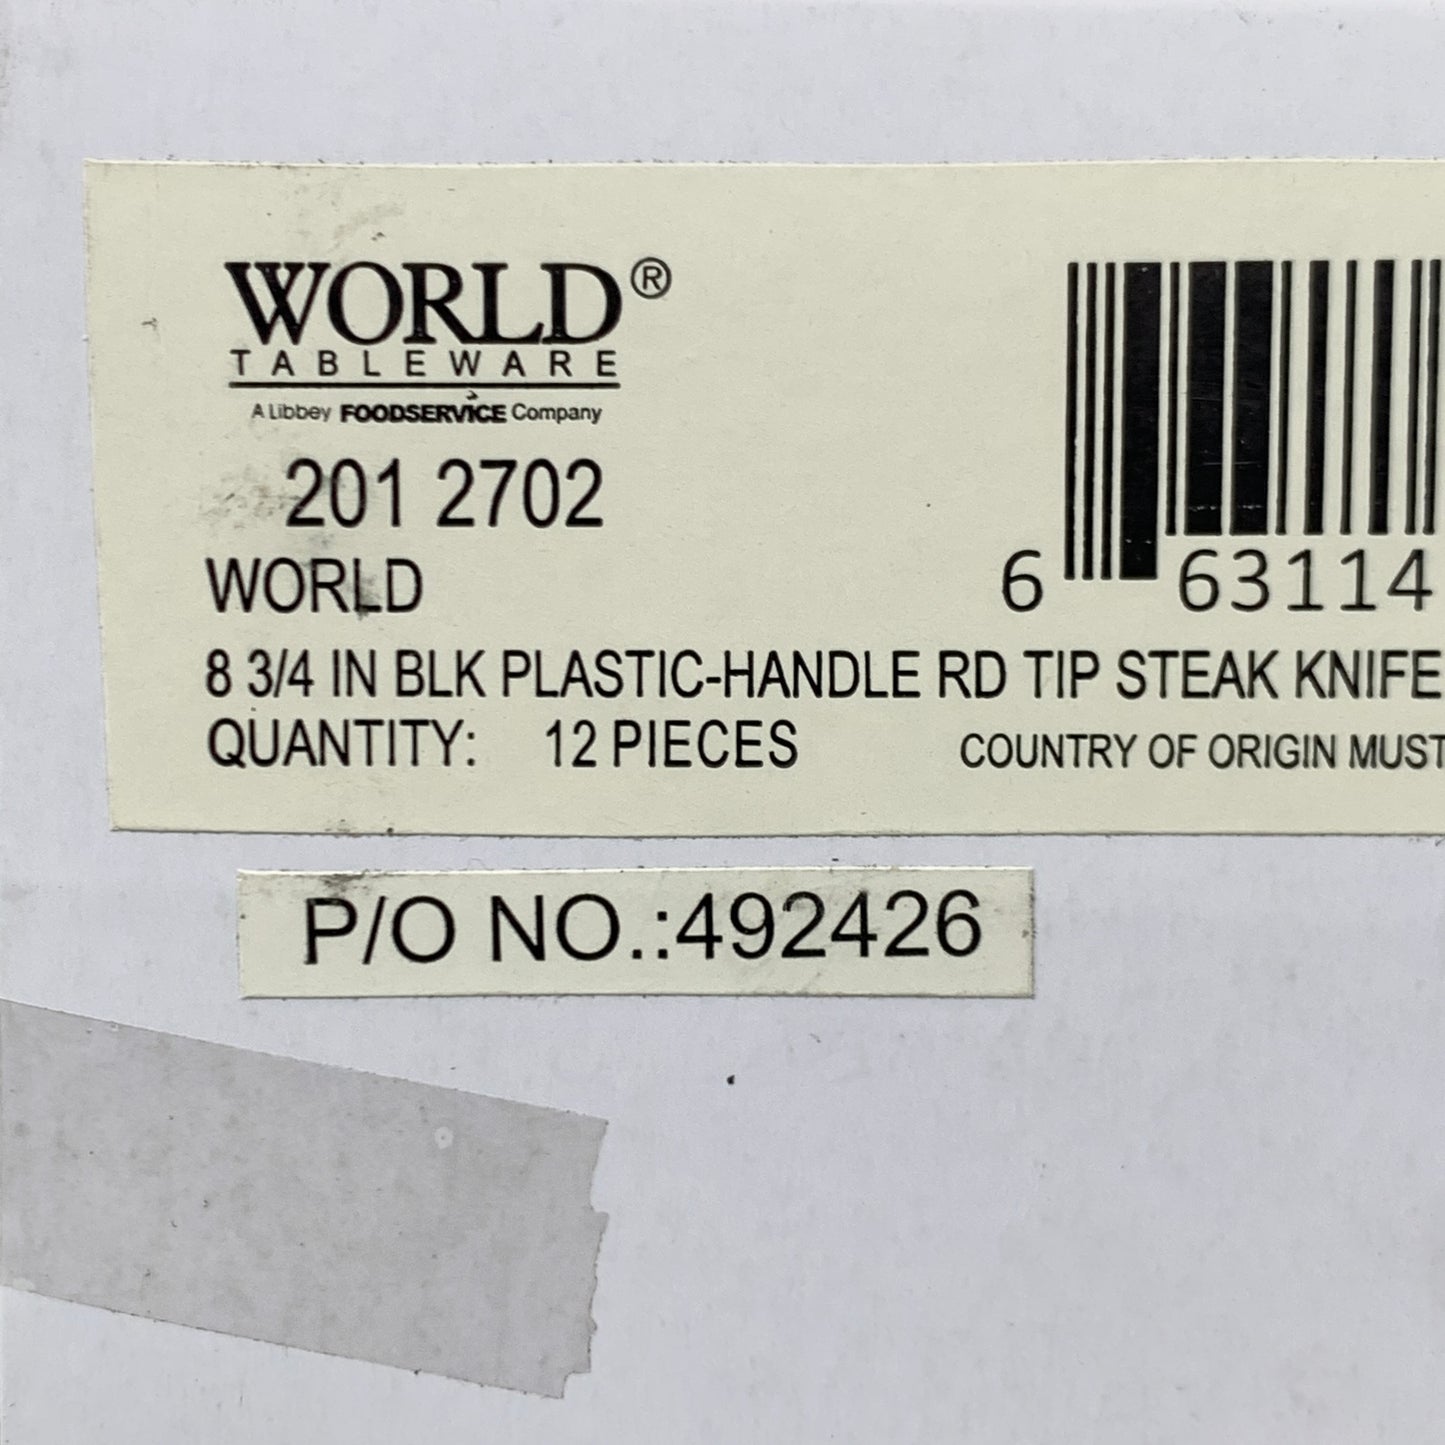 WORLD TABLEWARE (2 PACK) 24 Total Round Tip 8-3/4" Steak Knifes 201 2702